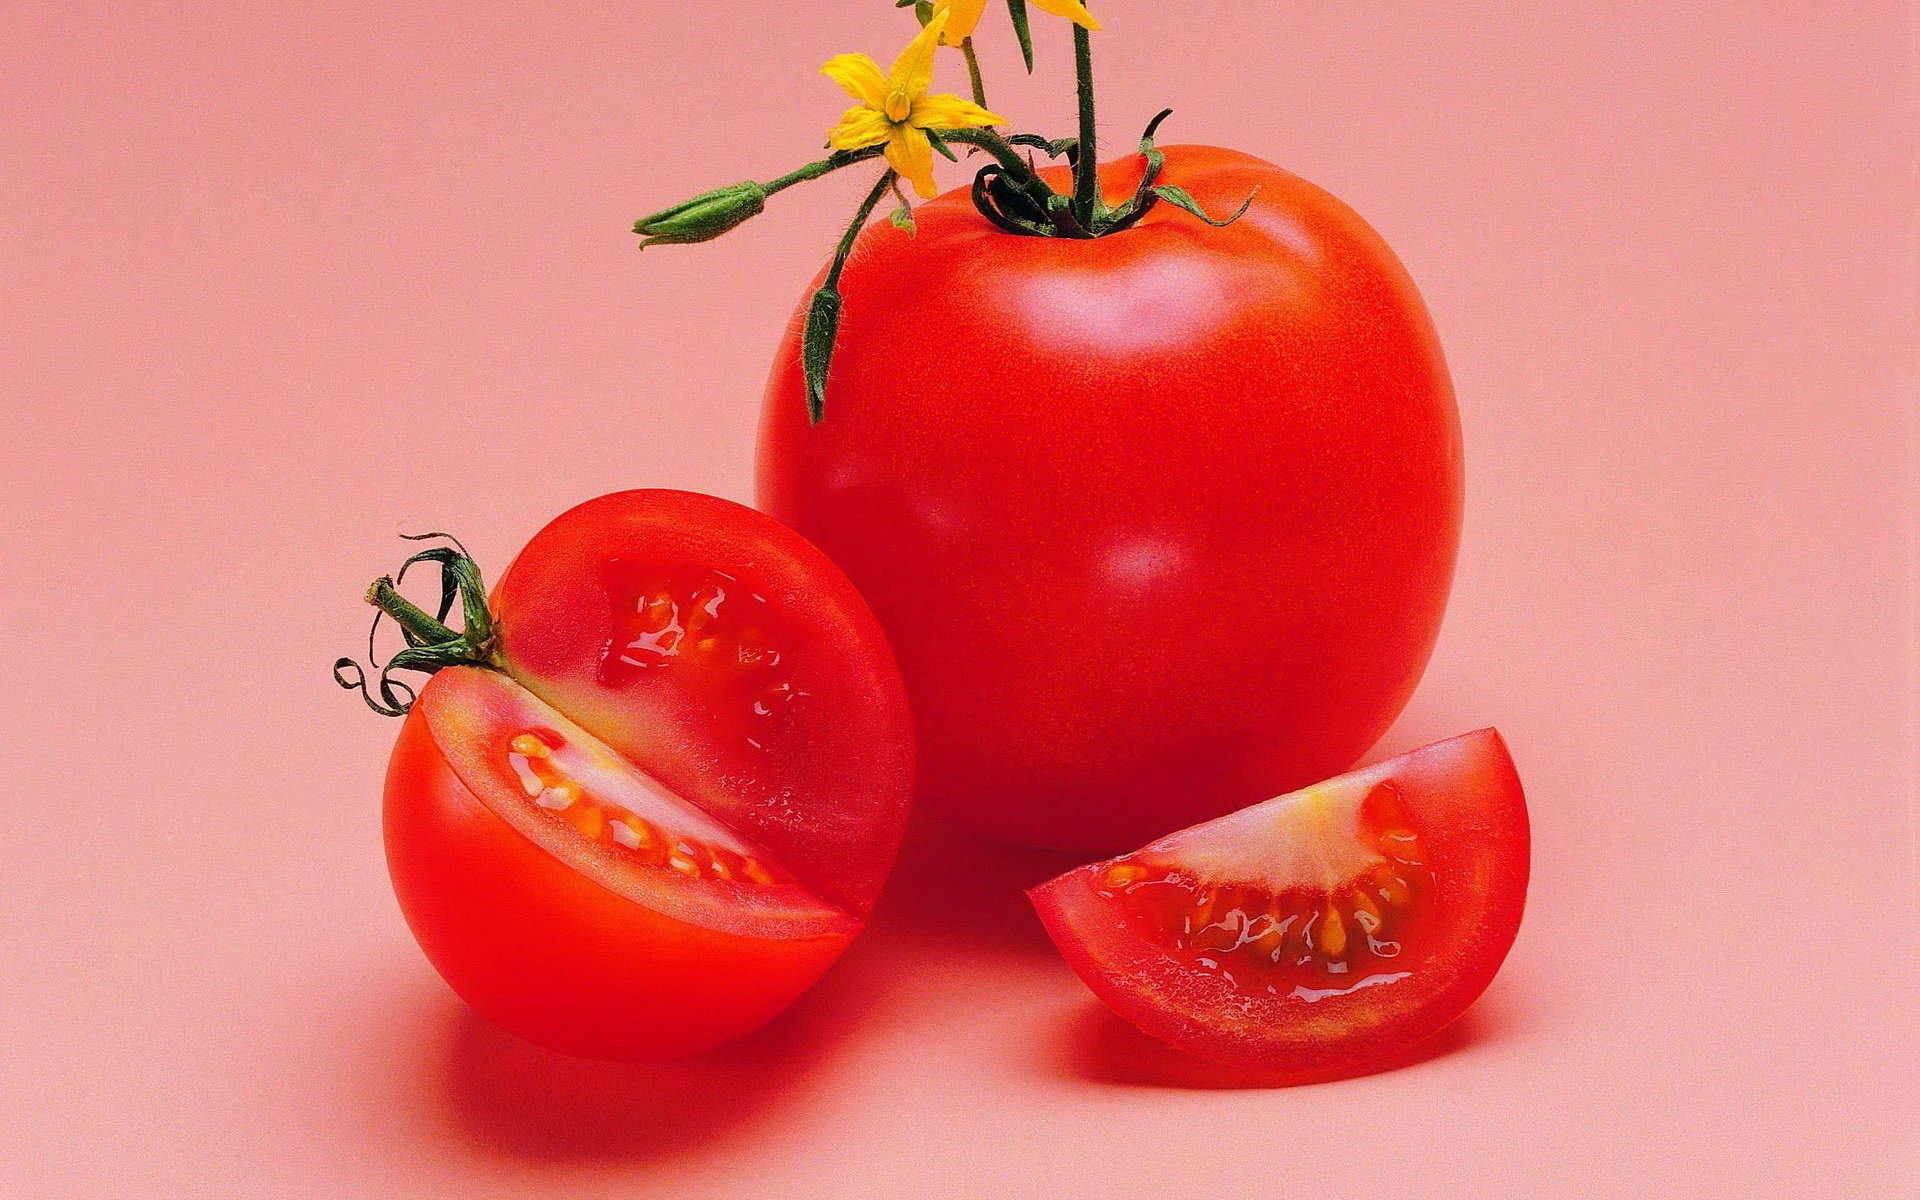 HD tomato wallpaper, High-definition image, Desktop background, Picture download, 1920x1200 HD Desktop